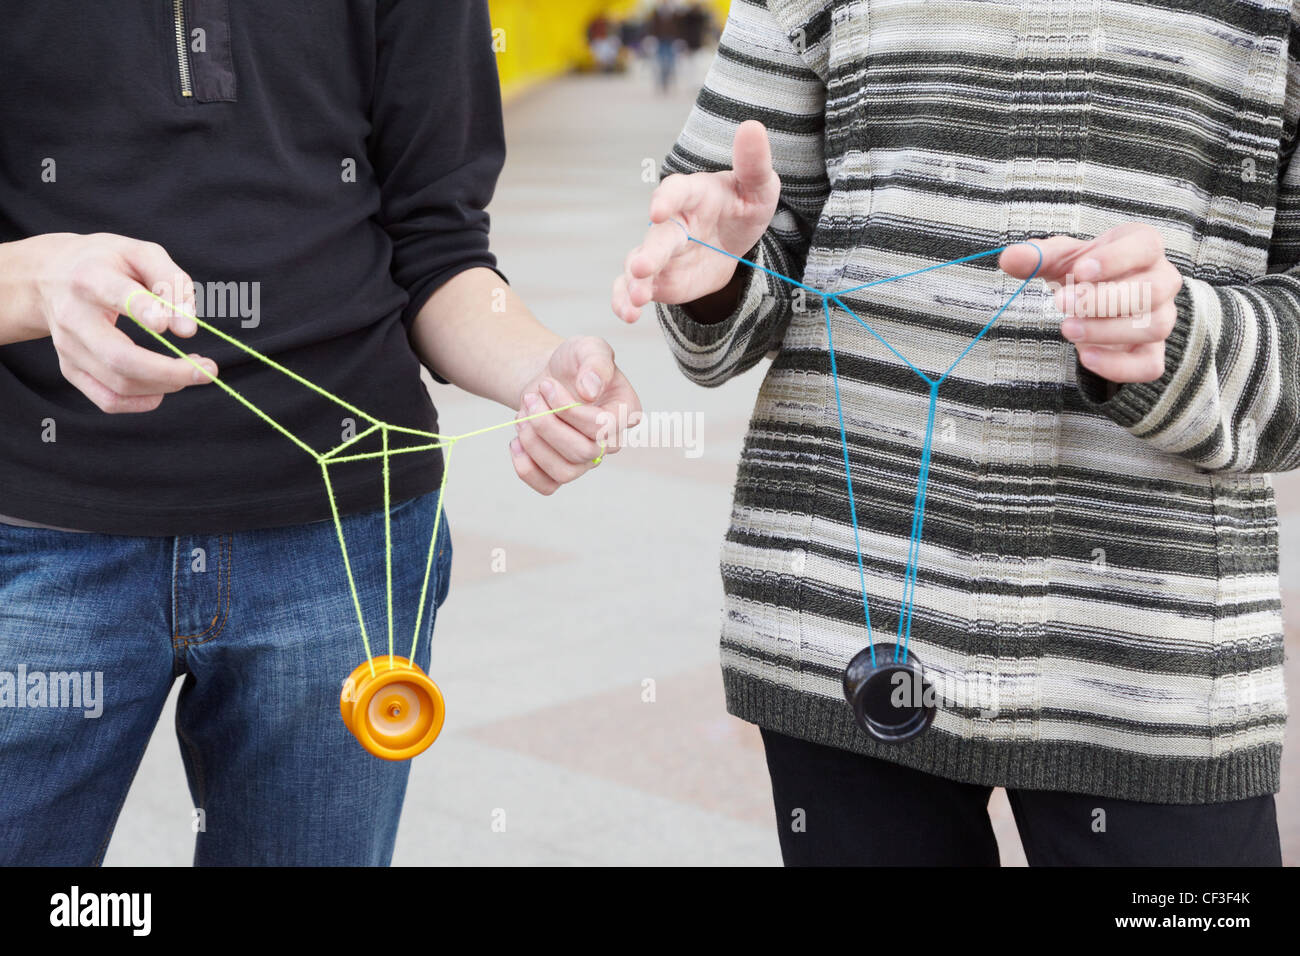 Yo yo spielzeug -Fotos und -Bildmaterial in hoher Auflösung – Alamy